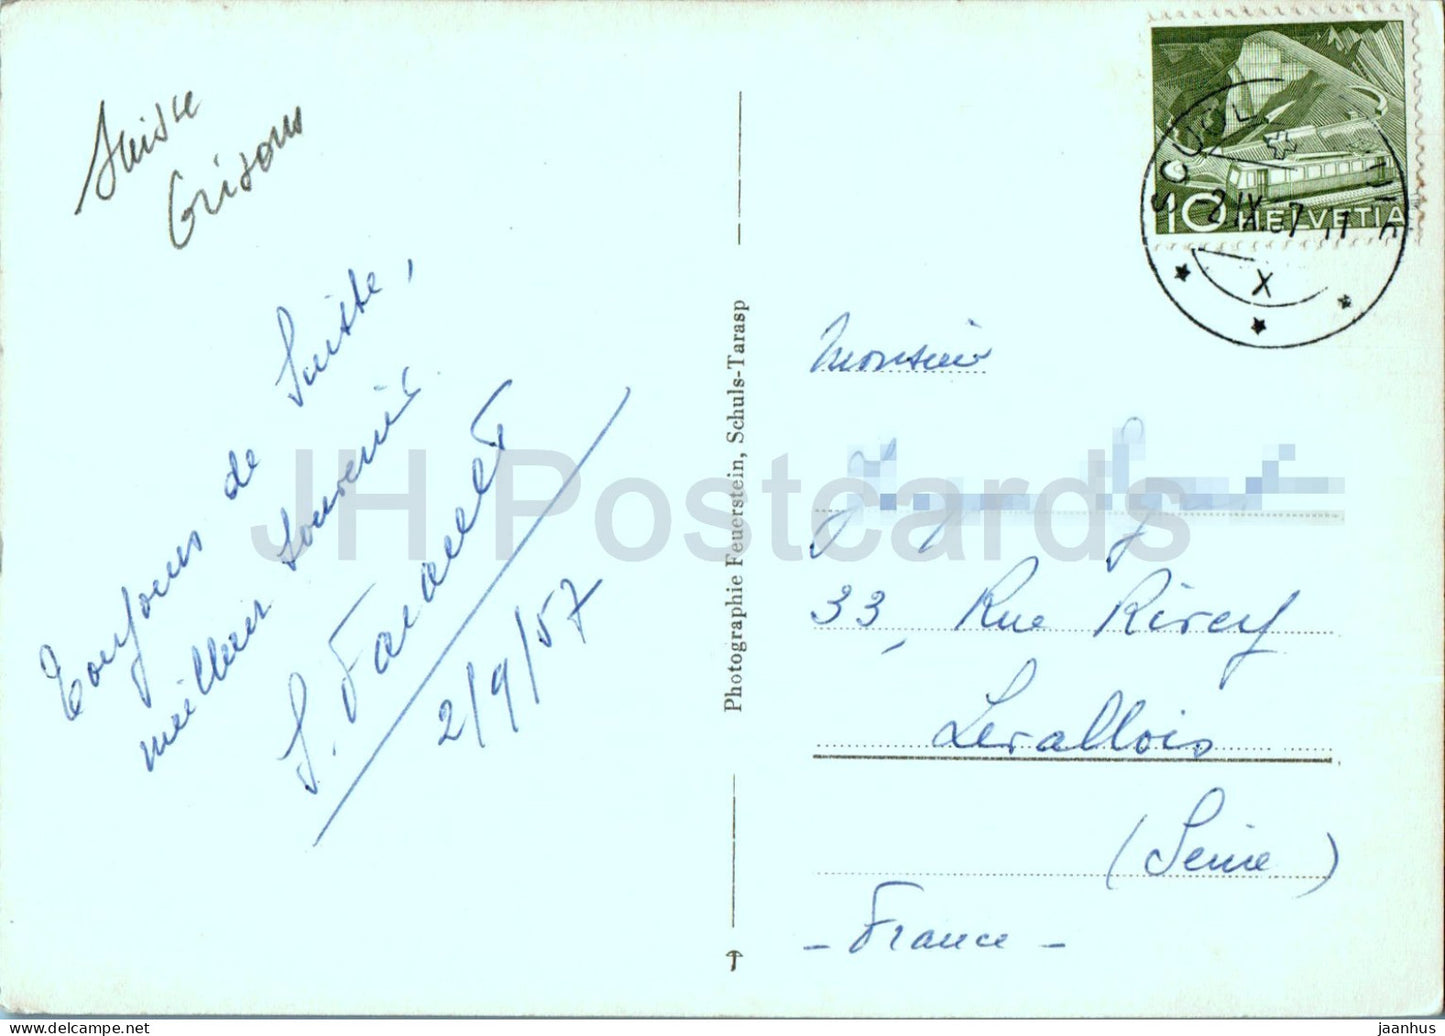 Piz Plavna - Val Minger - Nat Park - 1069 - old postcard - 1957 - Switzerland - used